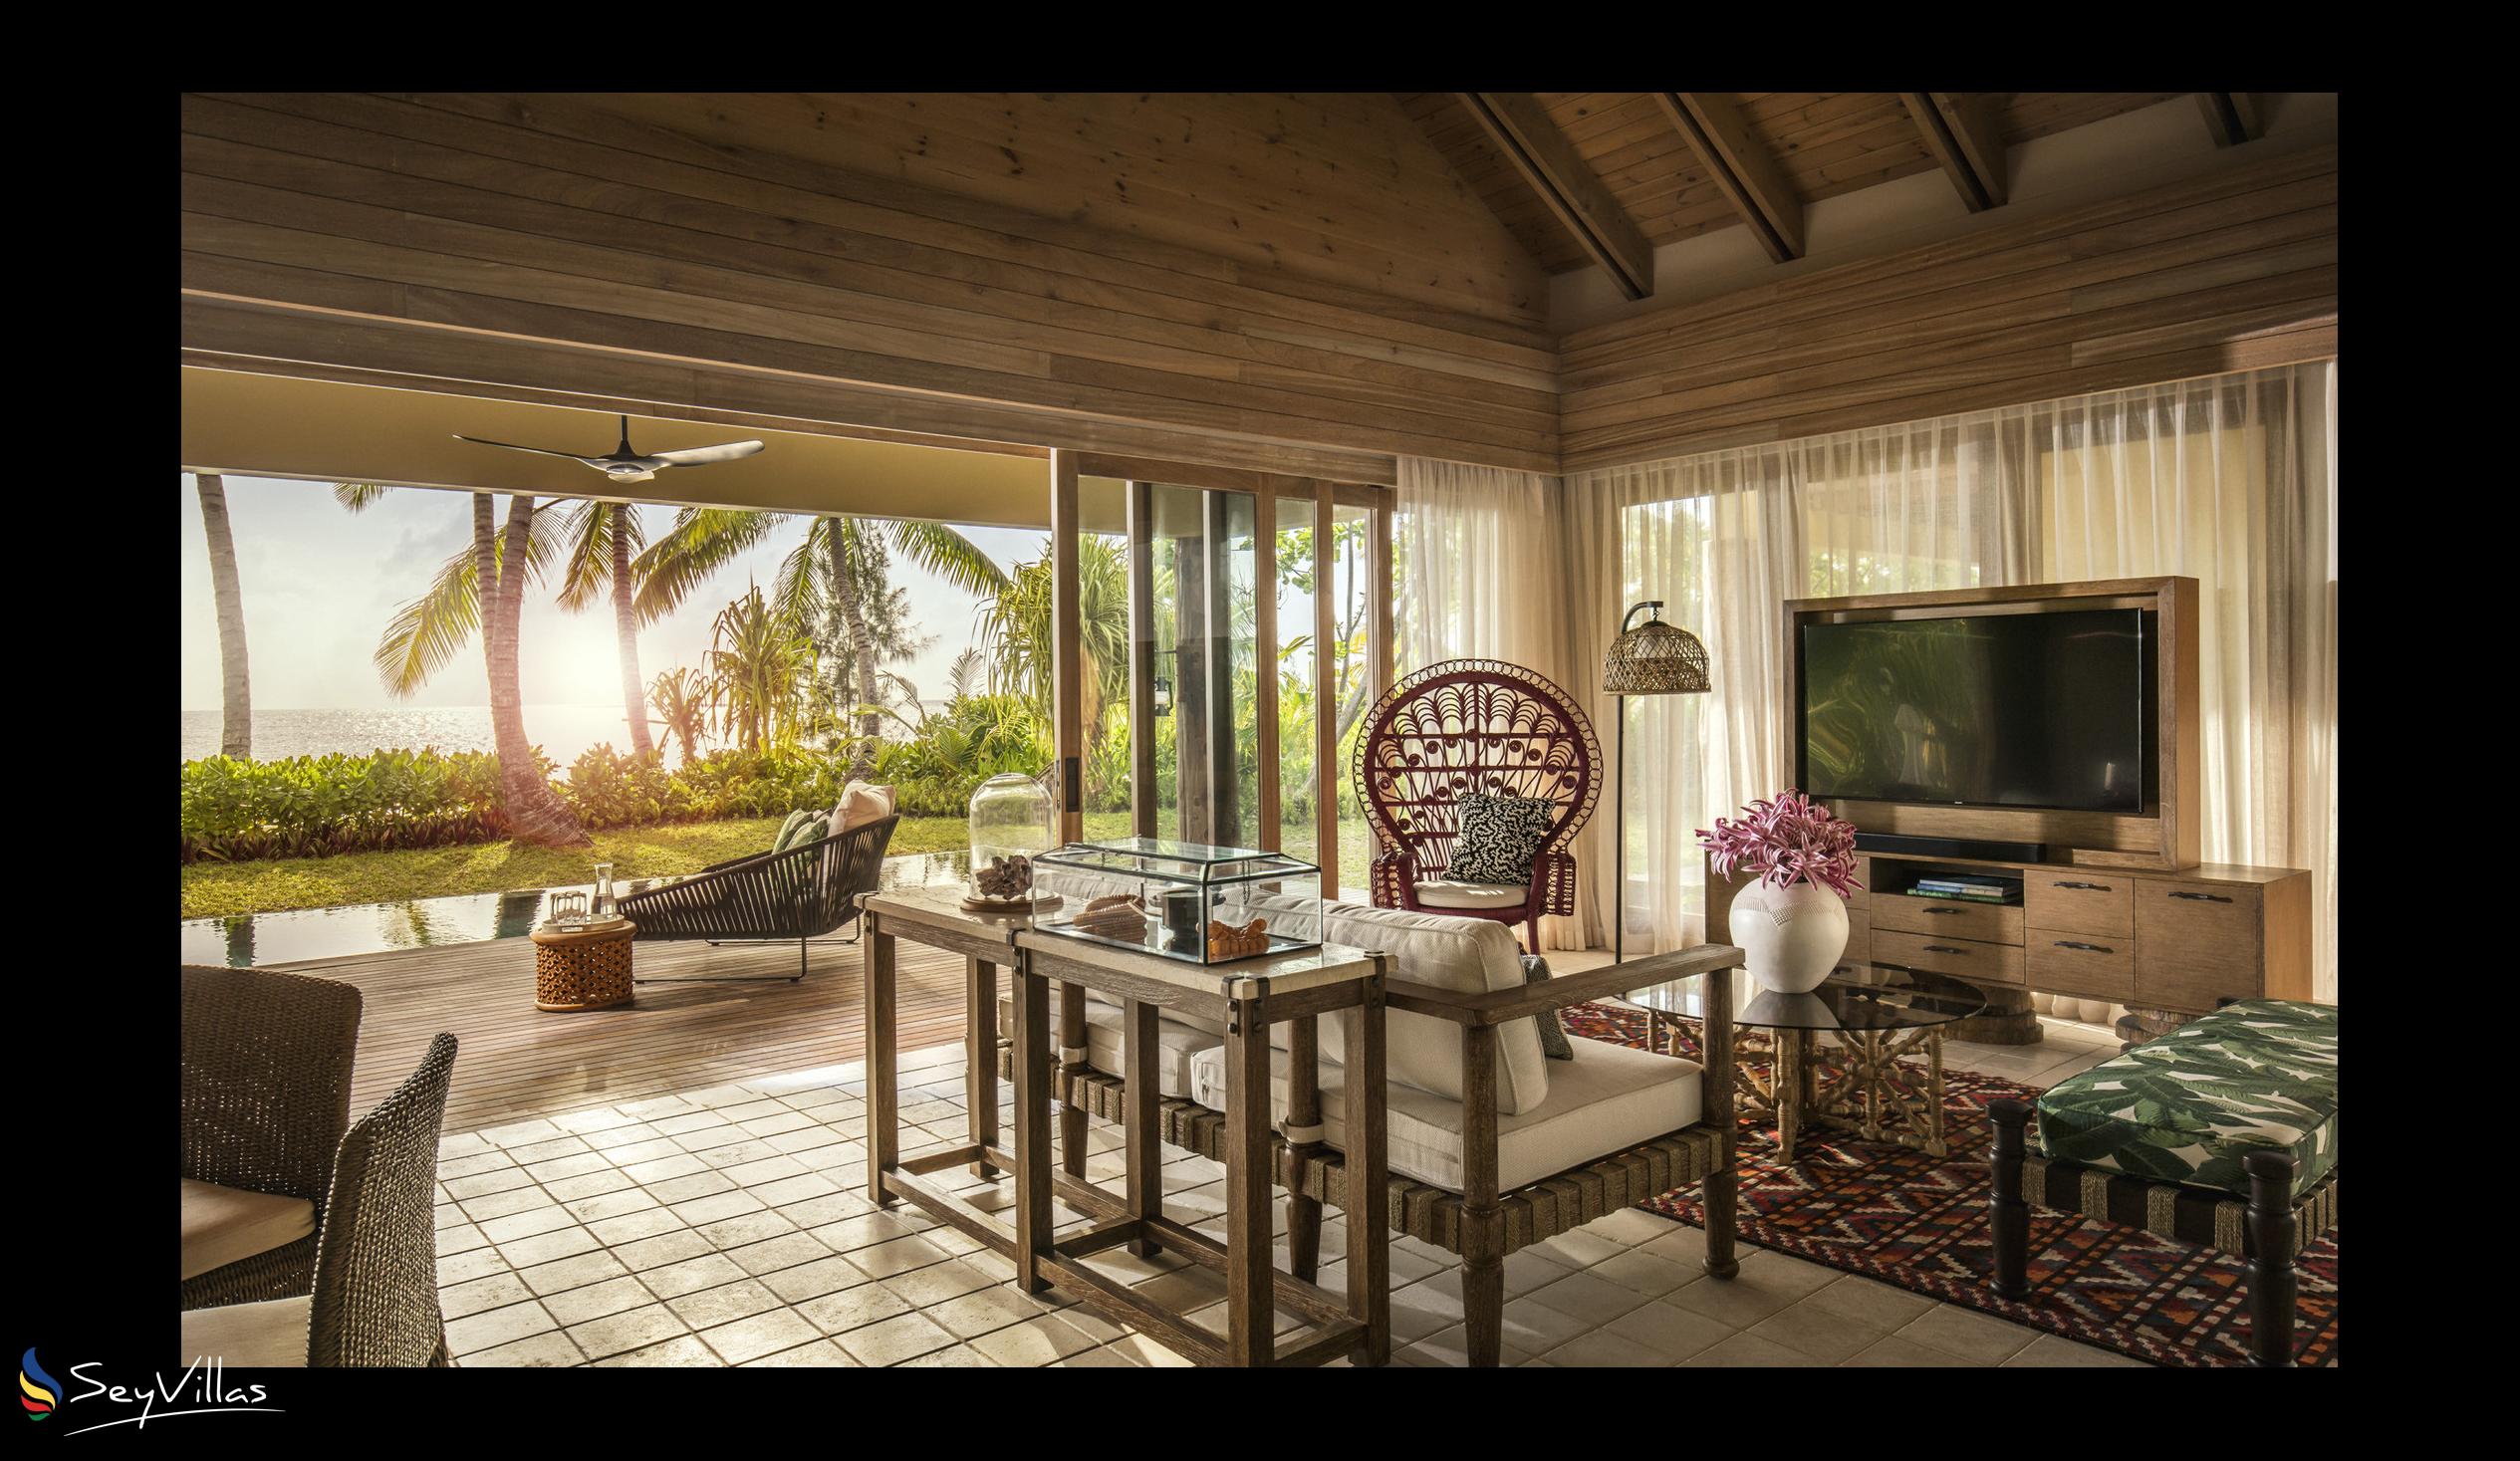 Foto 202: Four Seasons Resort Desroches Island - Desroches Suite - Desroches Island (Seychellen)